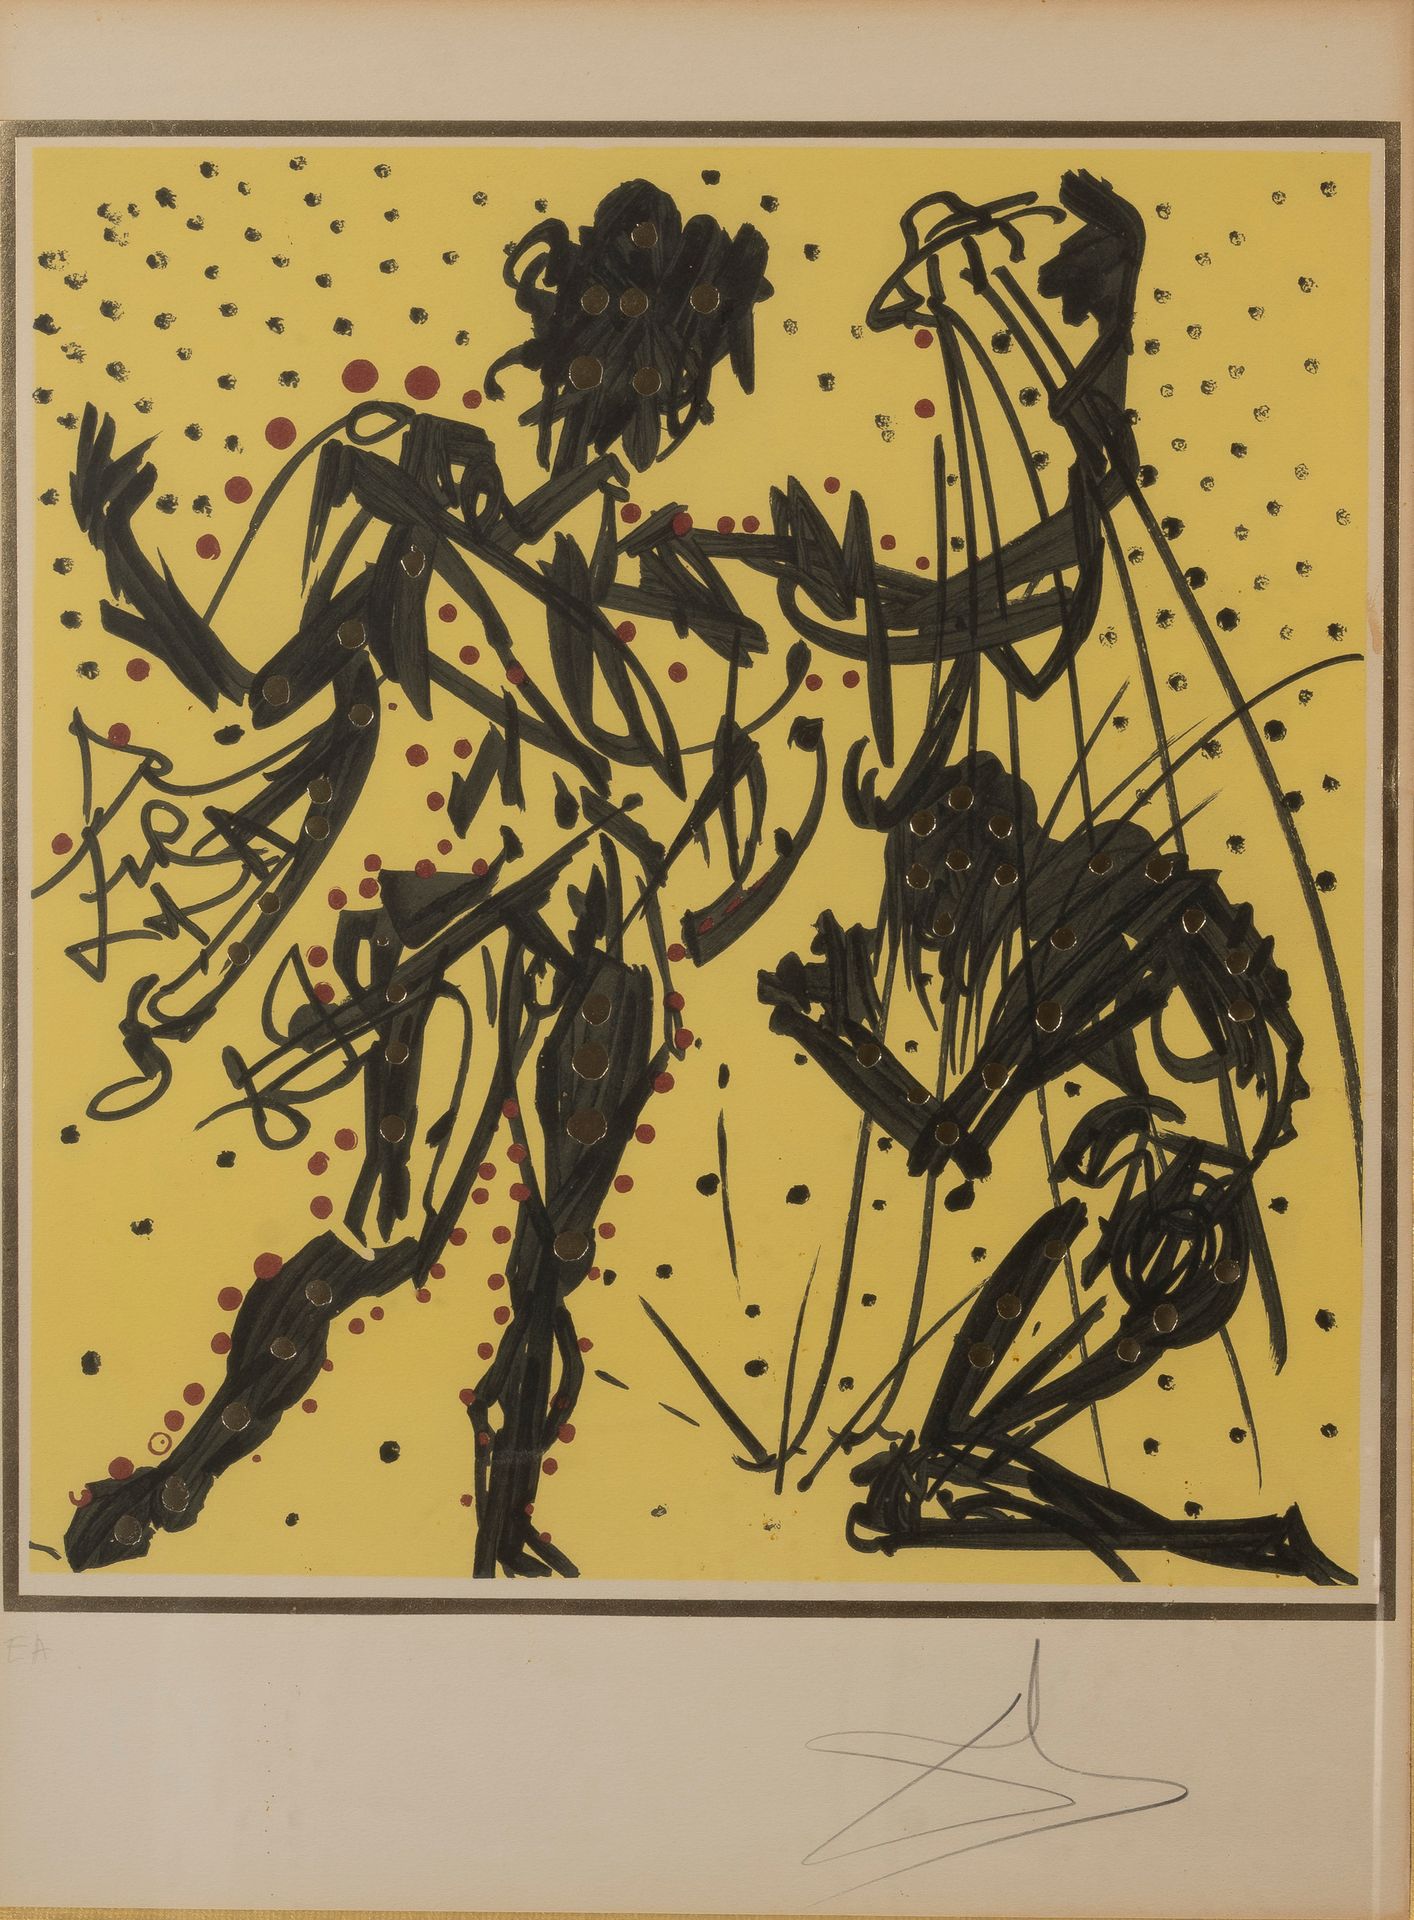 Null 萨尔瓦多-达利(1904-1989)

圆桌骑士

彩色石板画，已签名，并以铅笔注明艺术家的证明。

62 x 46 cm 正在观看